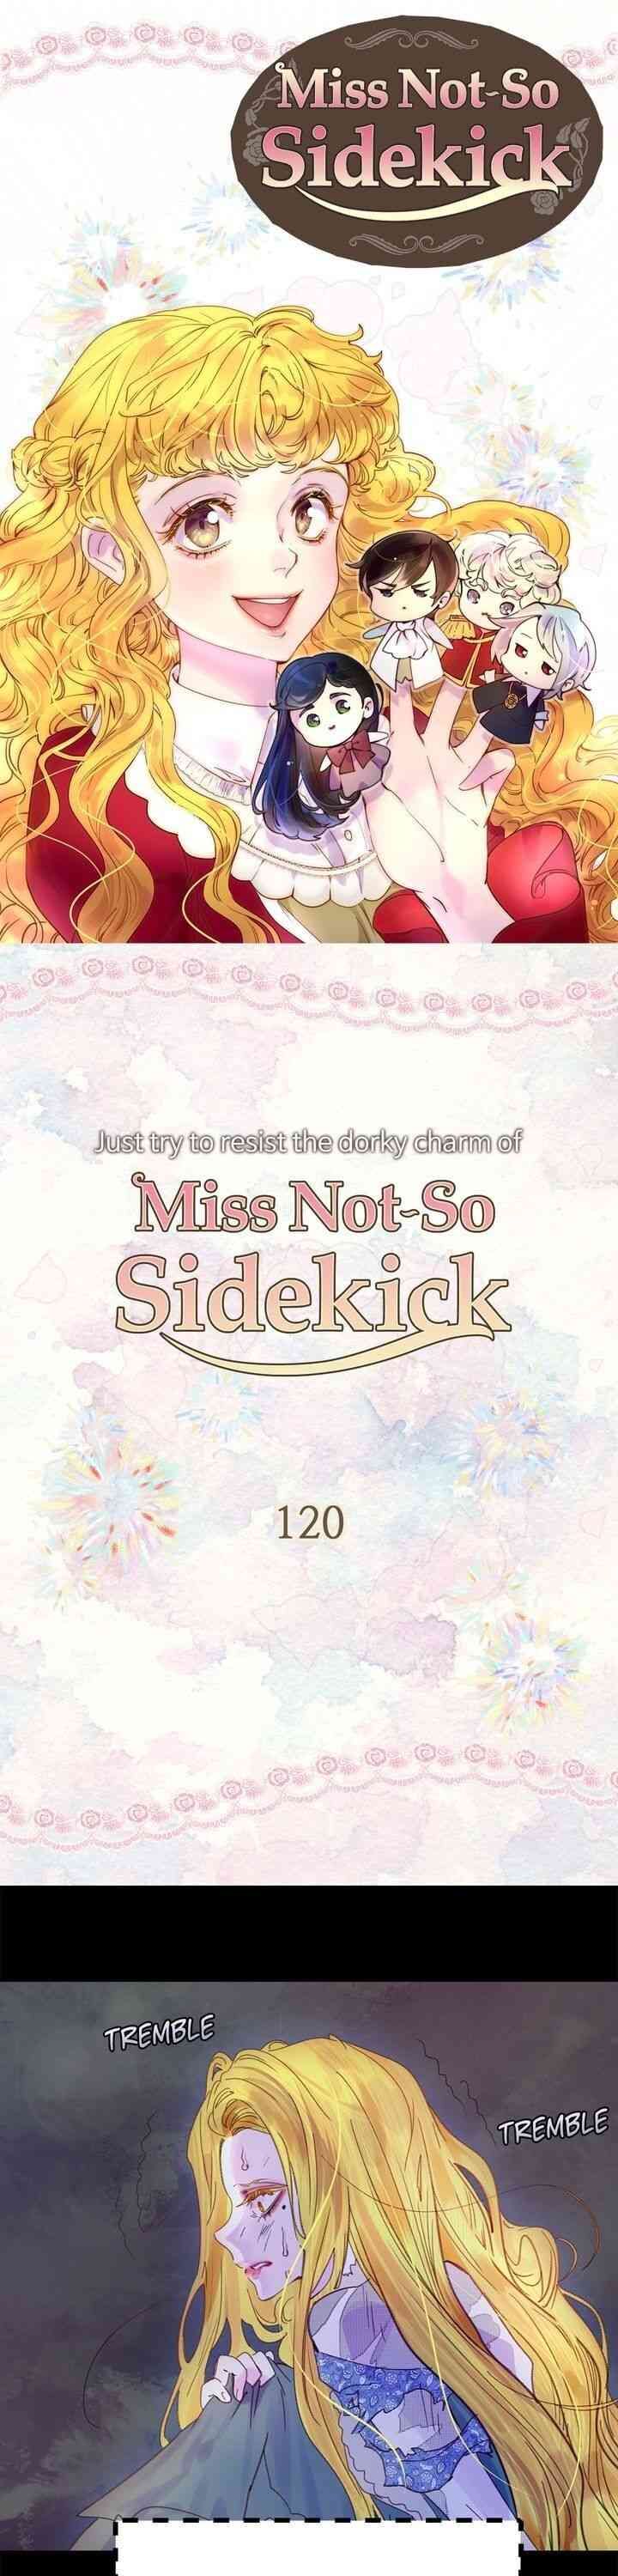 Miss Not-So Sidekick Chapter 120 page 1